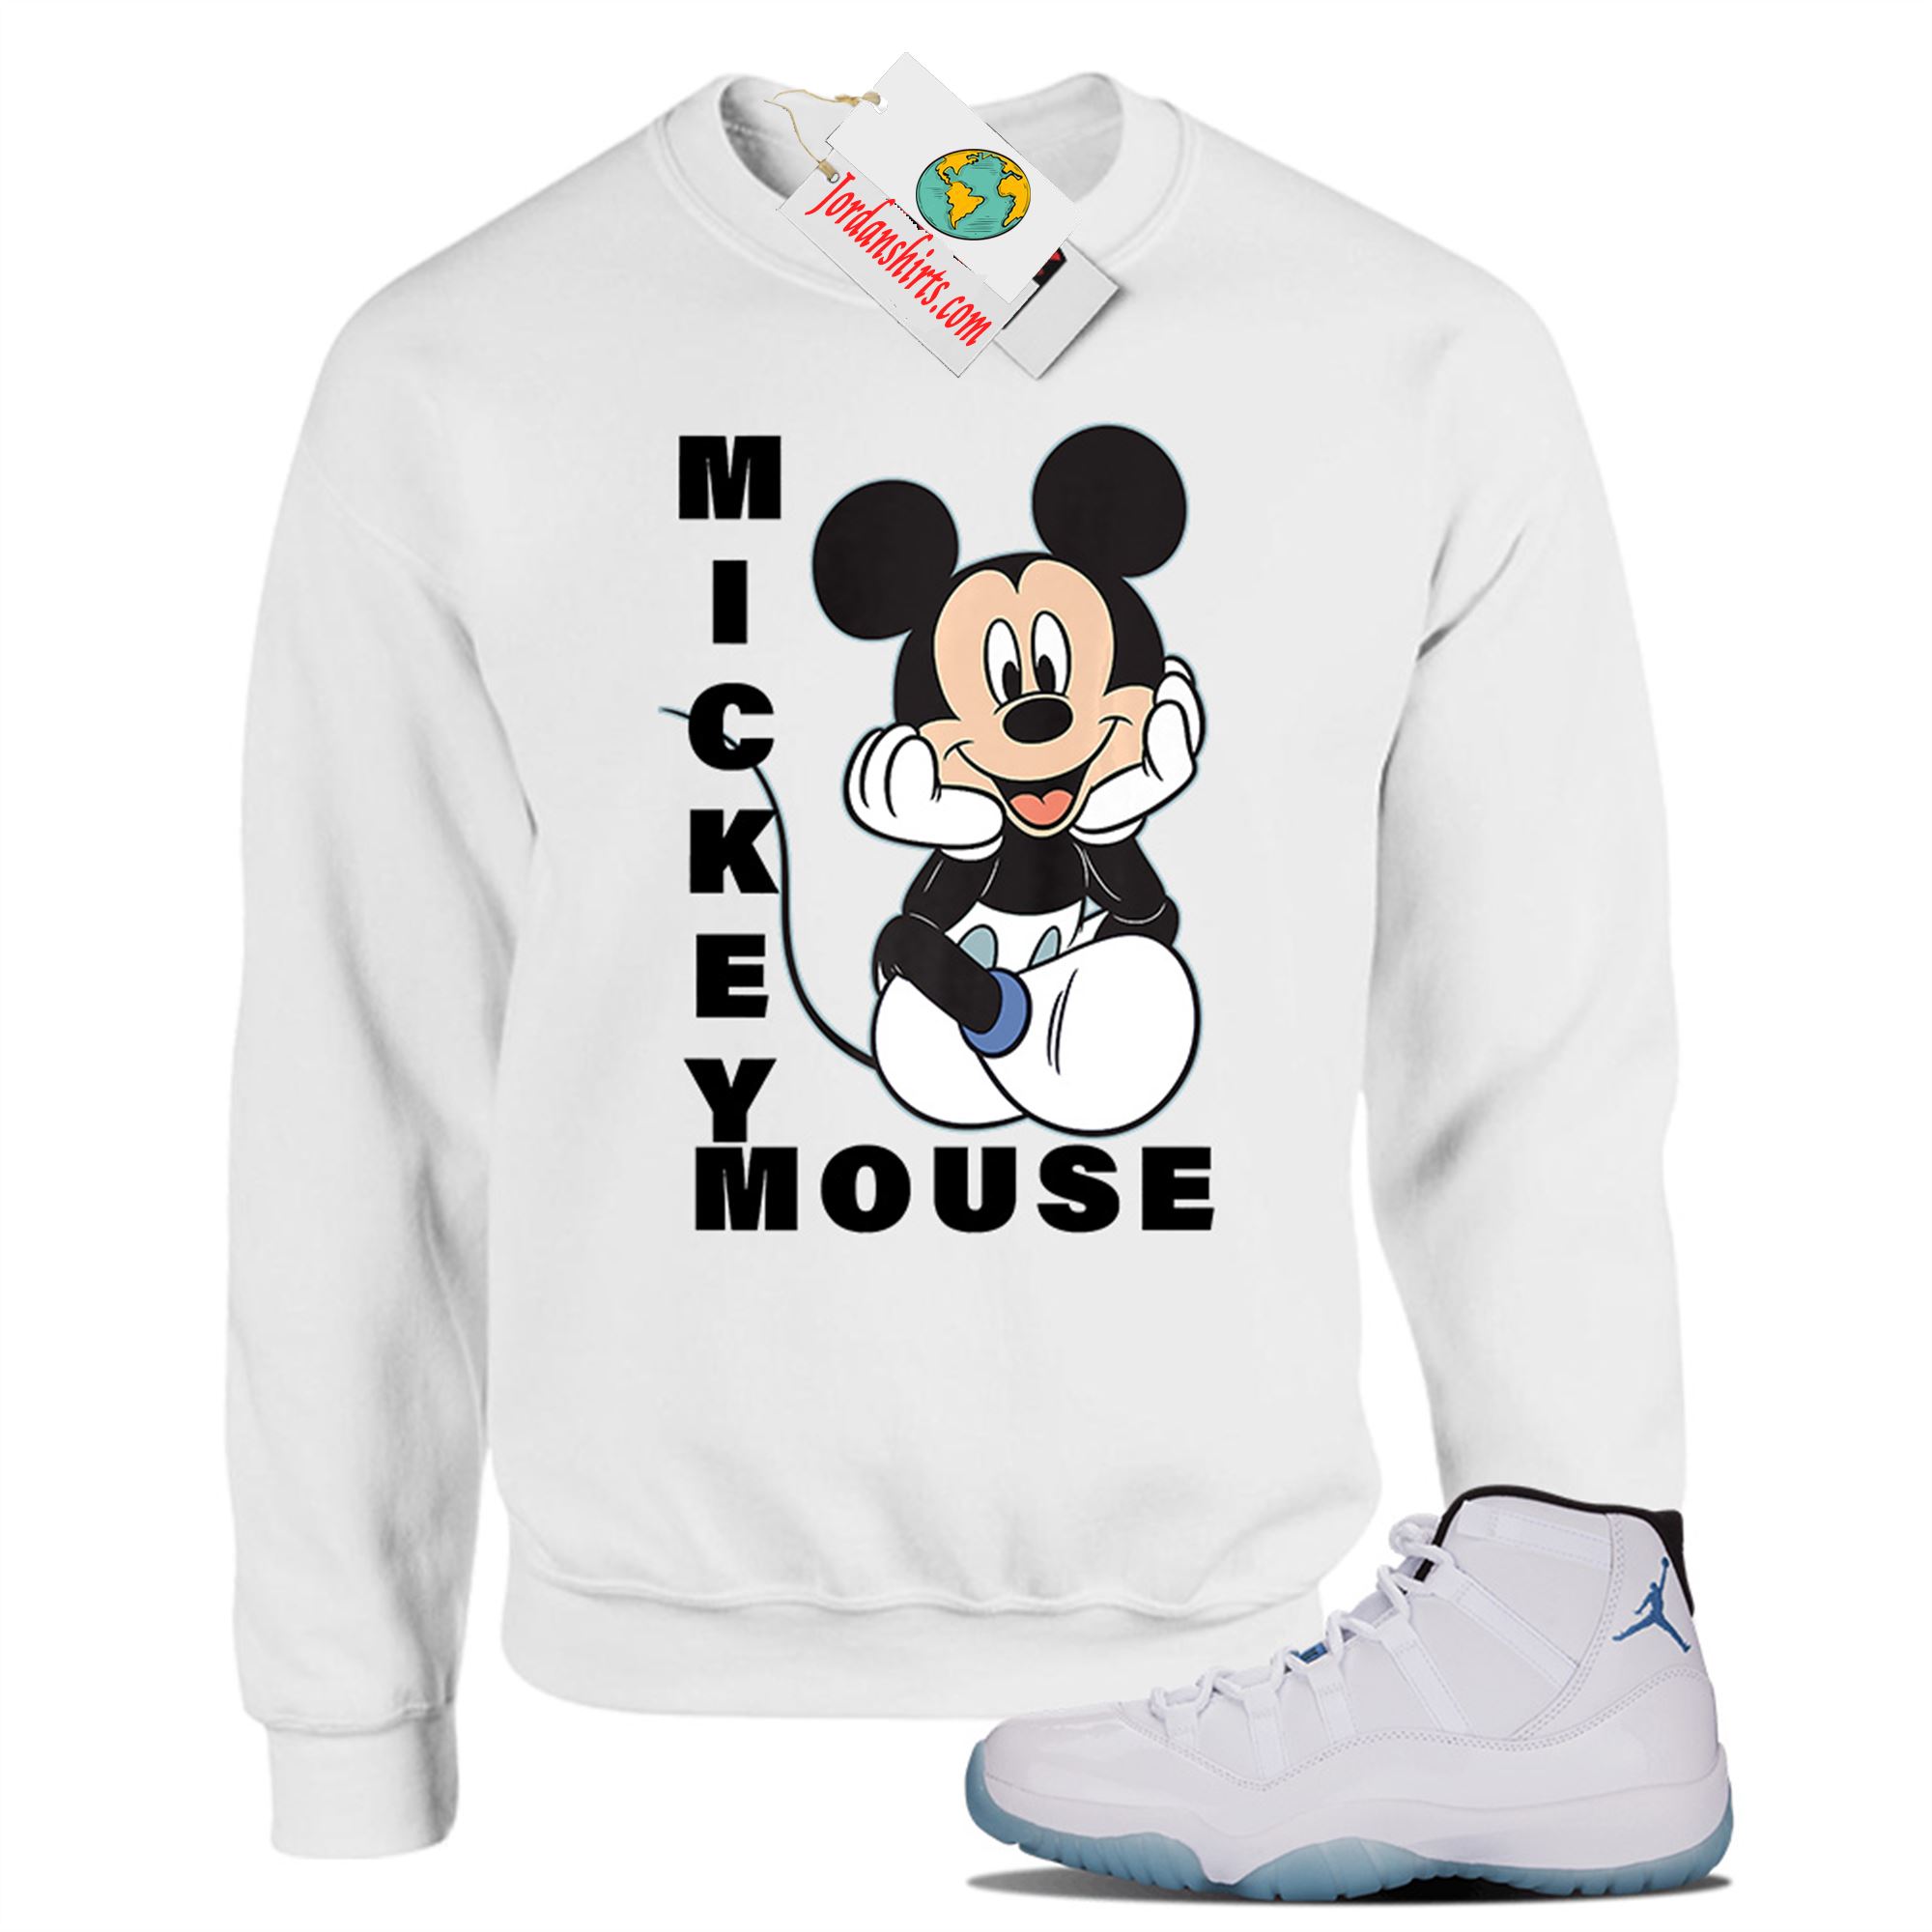 Jordan 11 Sweatshirt, Disney Mickey Mouse Hands In Face White Sweatshirt Air Jordan 11 Legend Blue 11s Full Size Up To 5xl